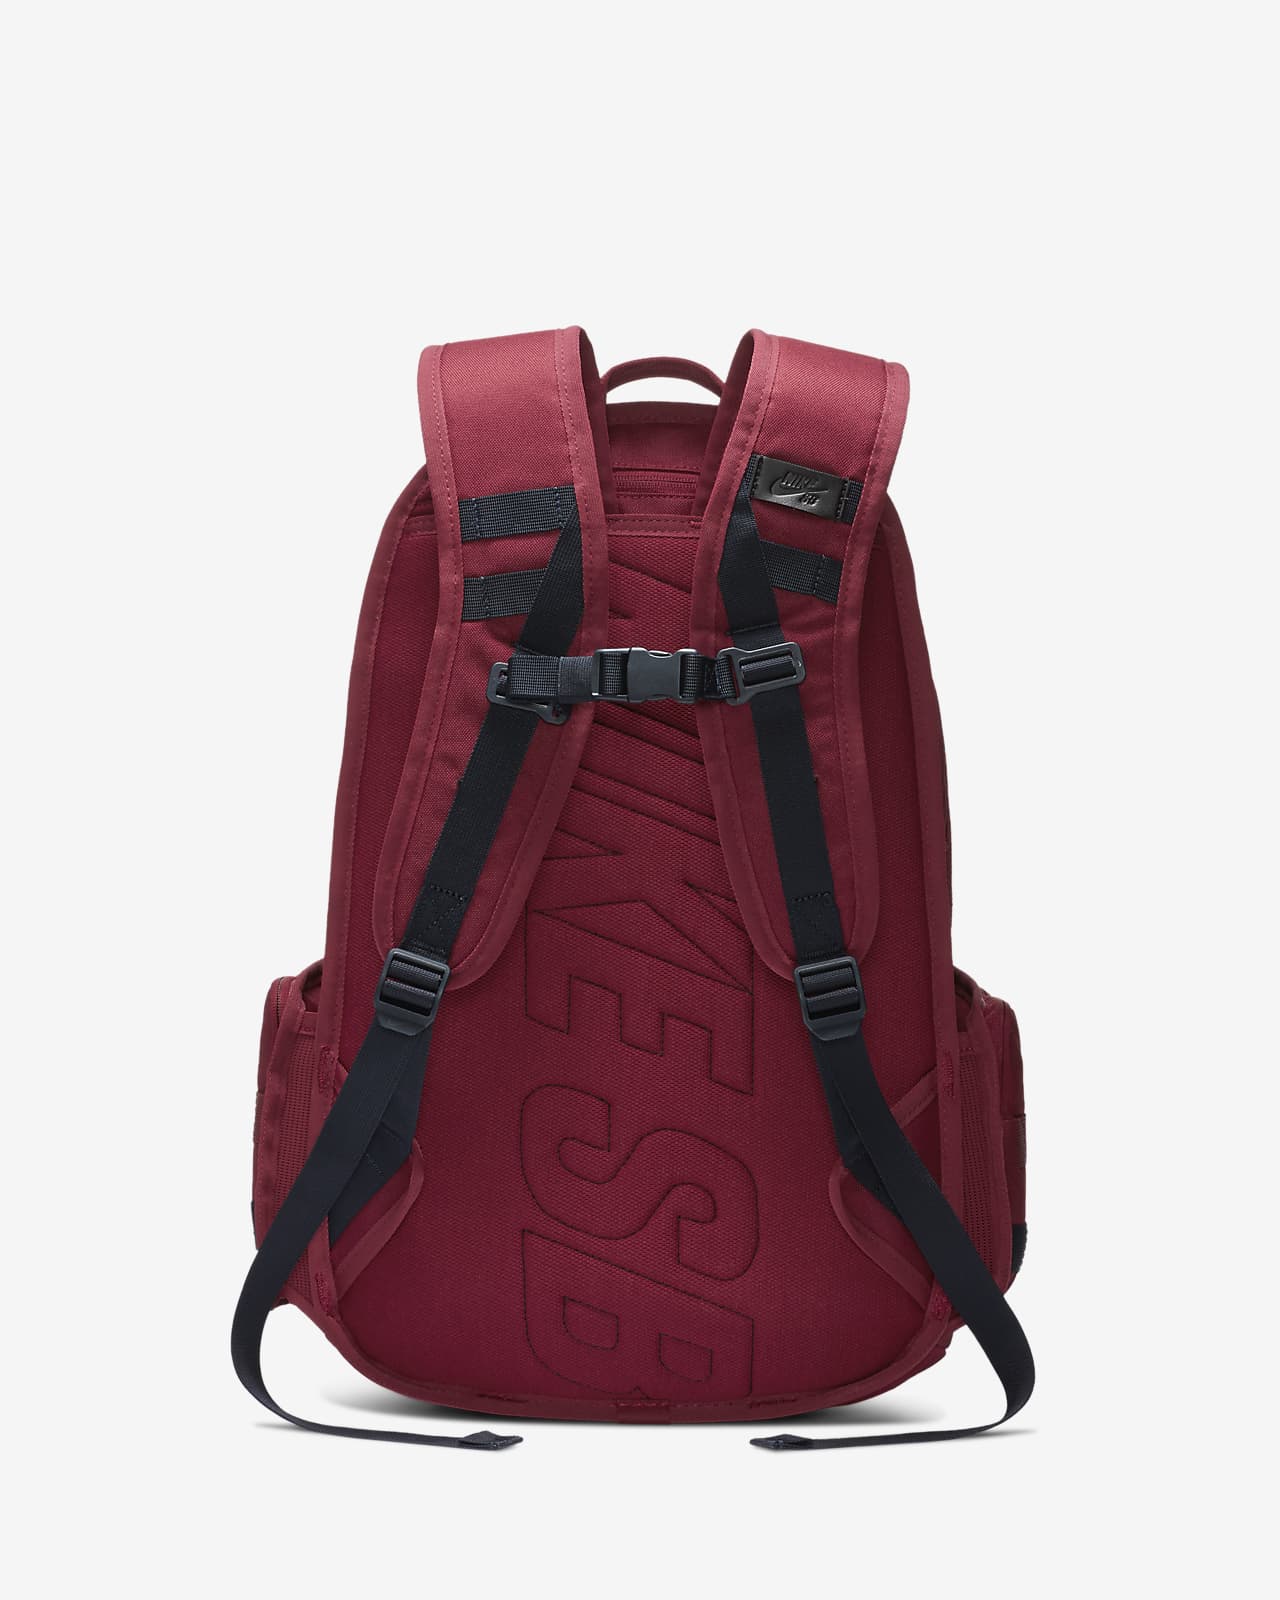 nike backpacks with holes